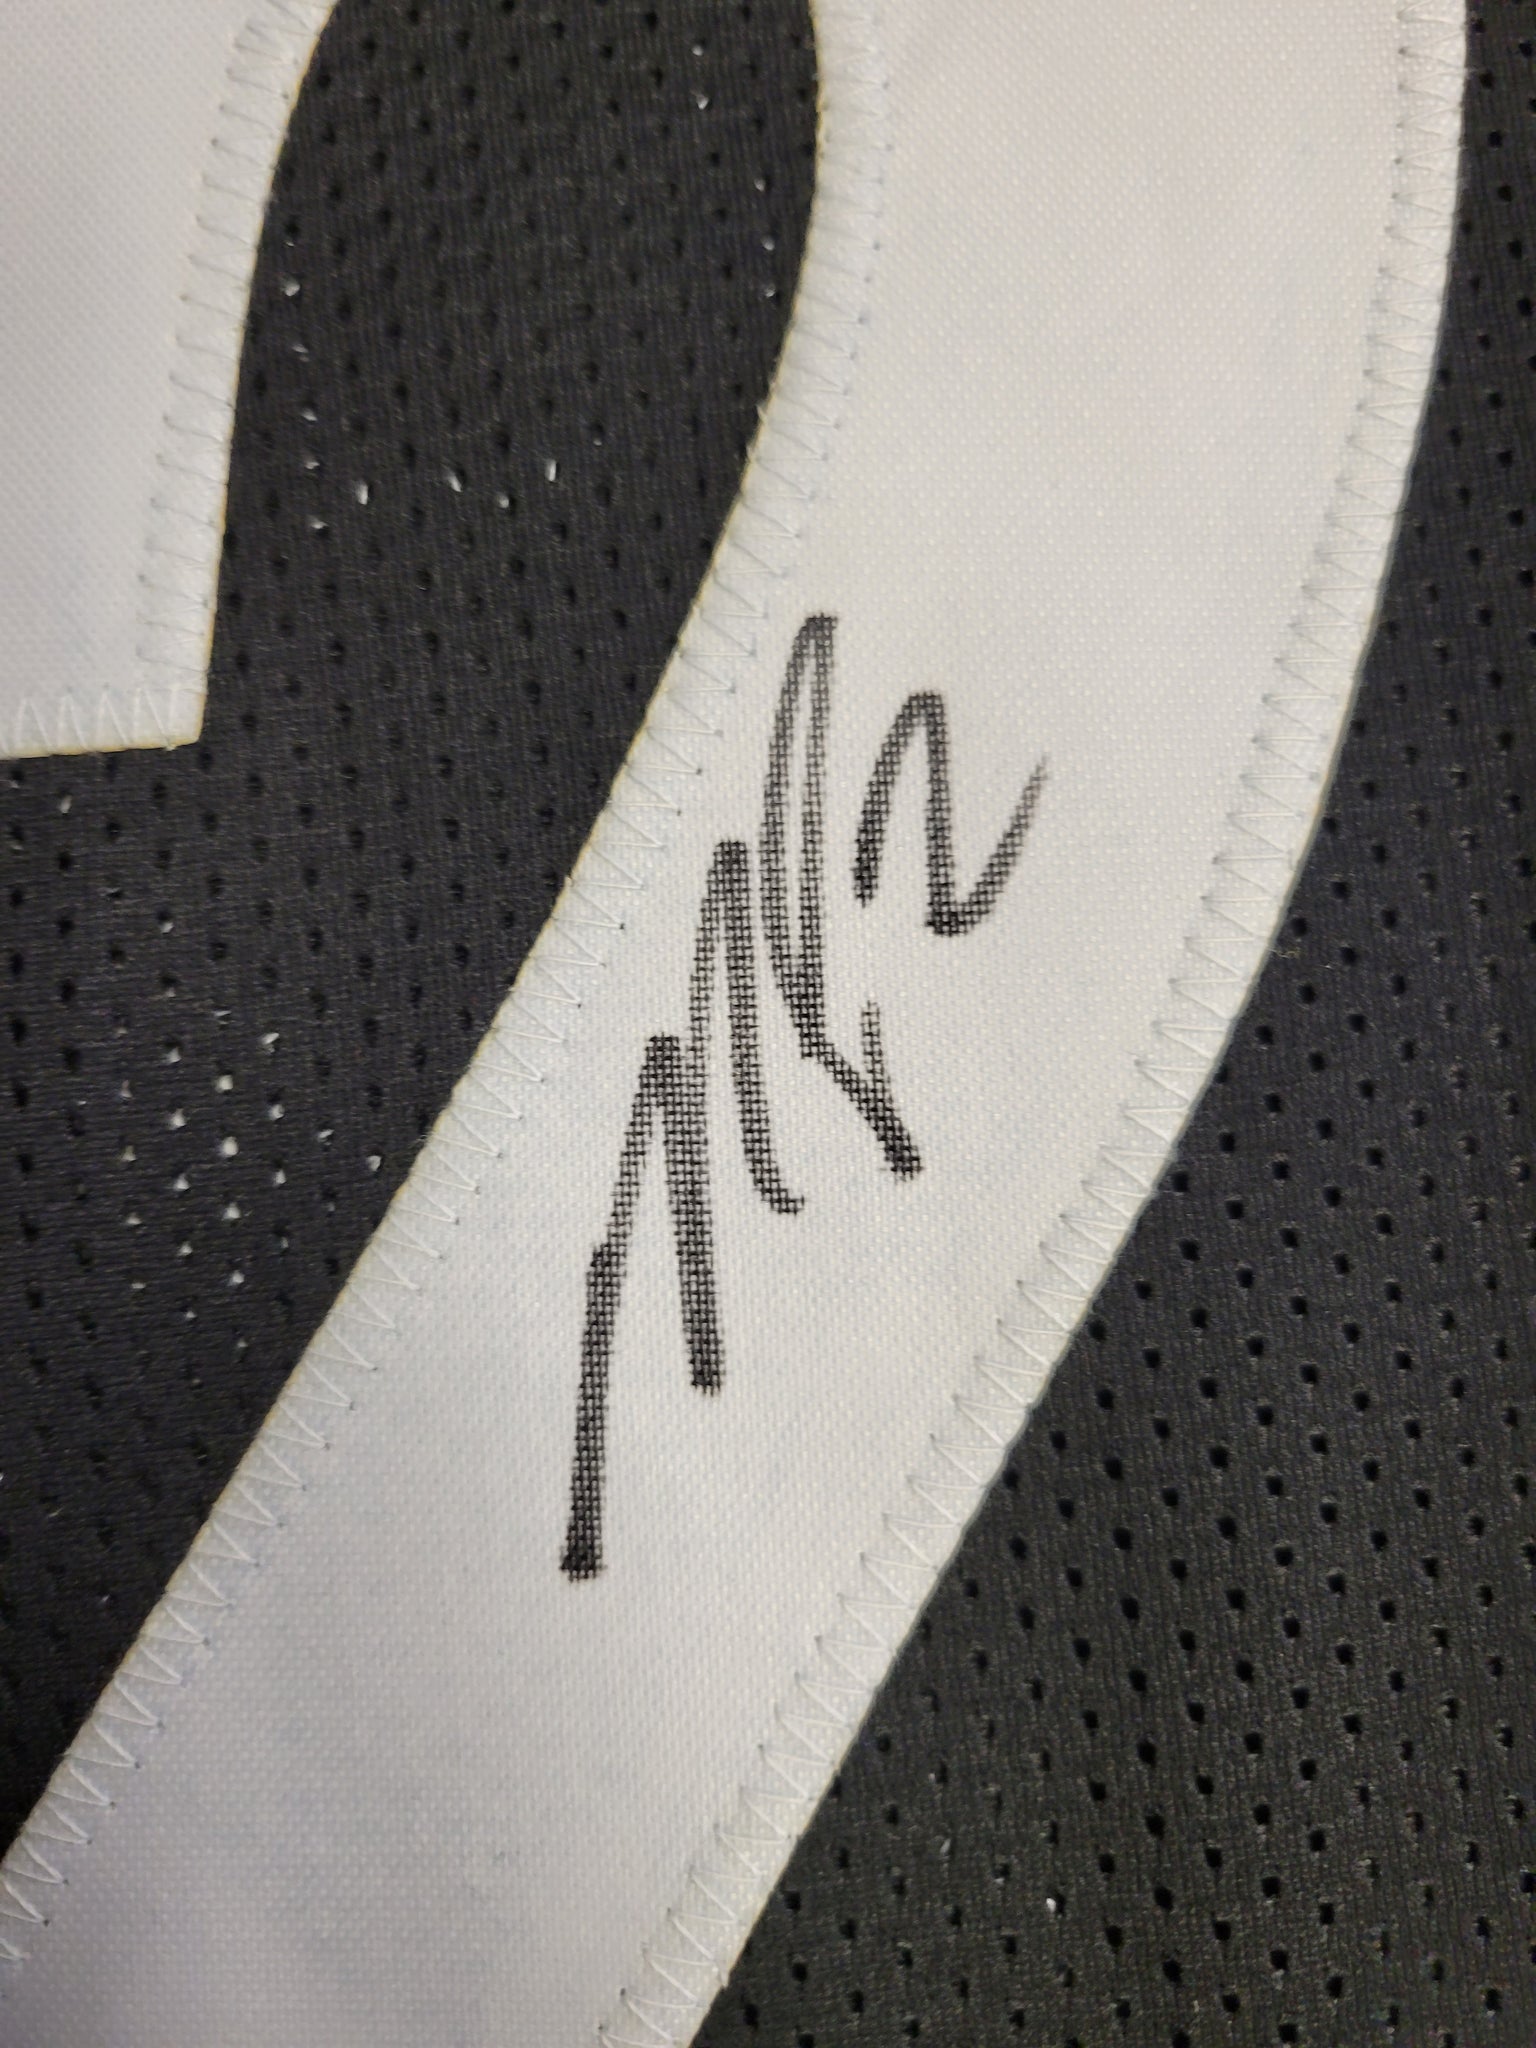 Michael Vick Authentic Signed Pro Style Jersey Autographed JSA